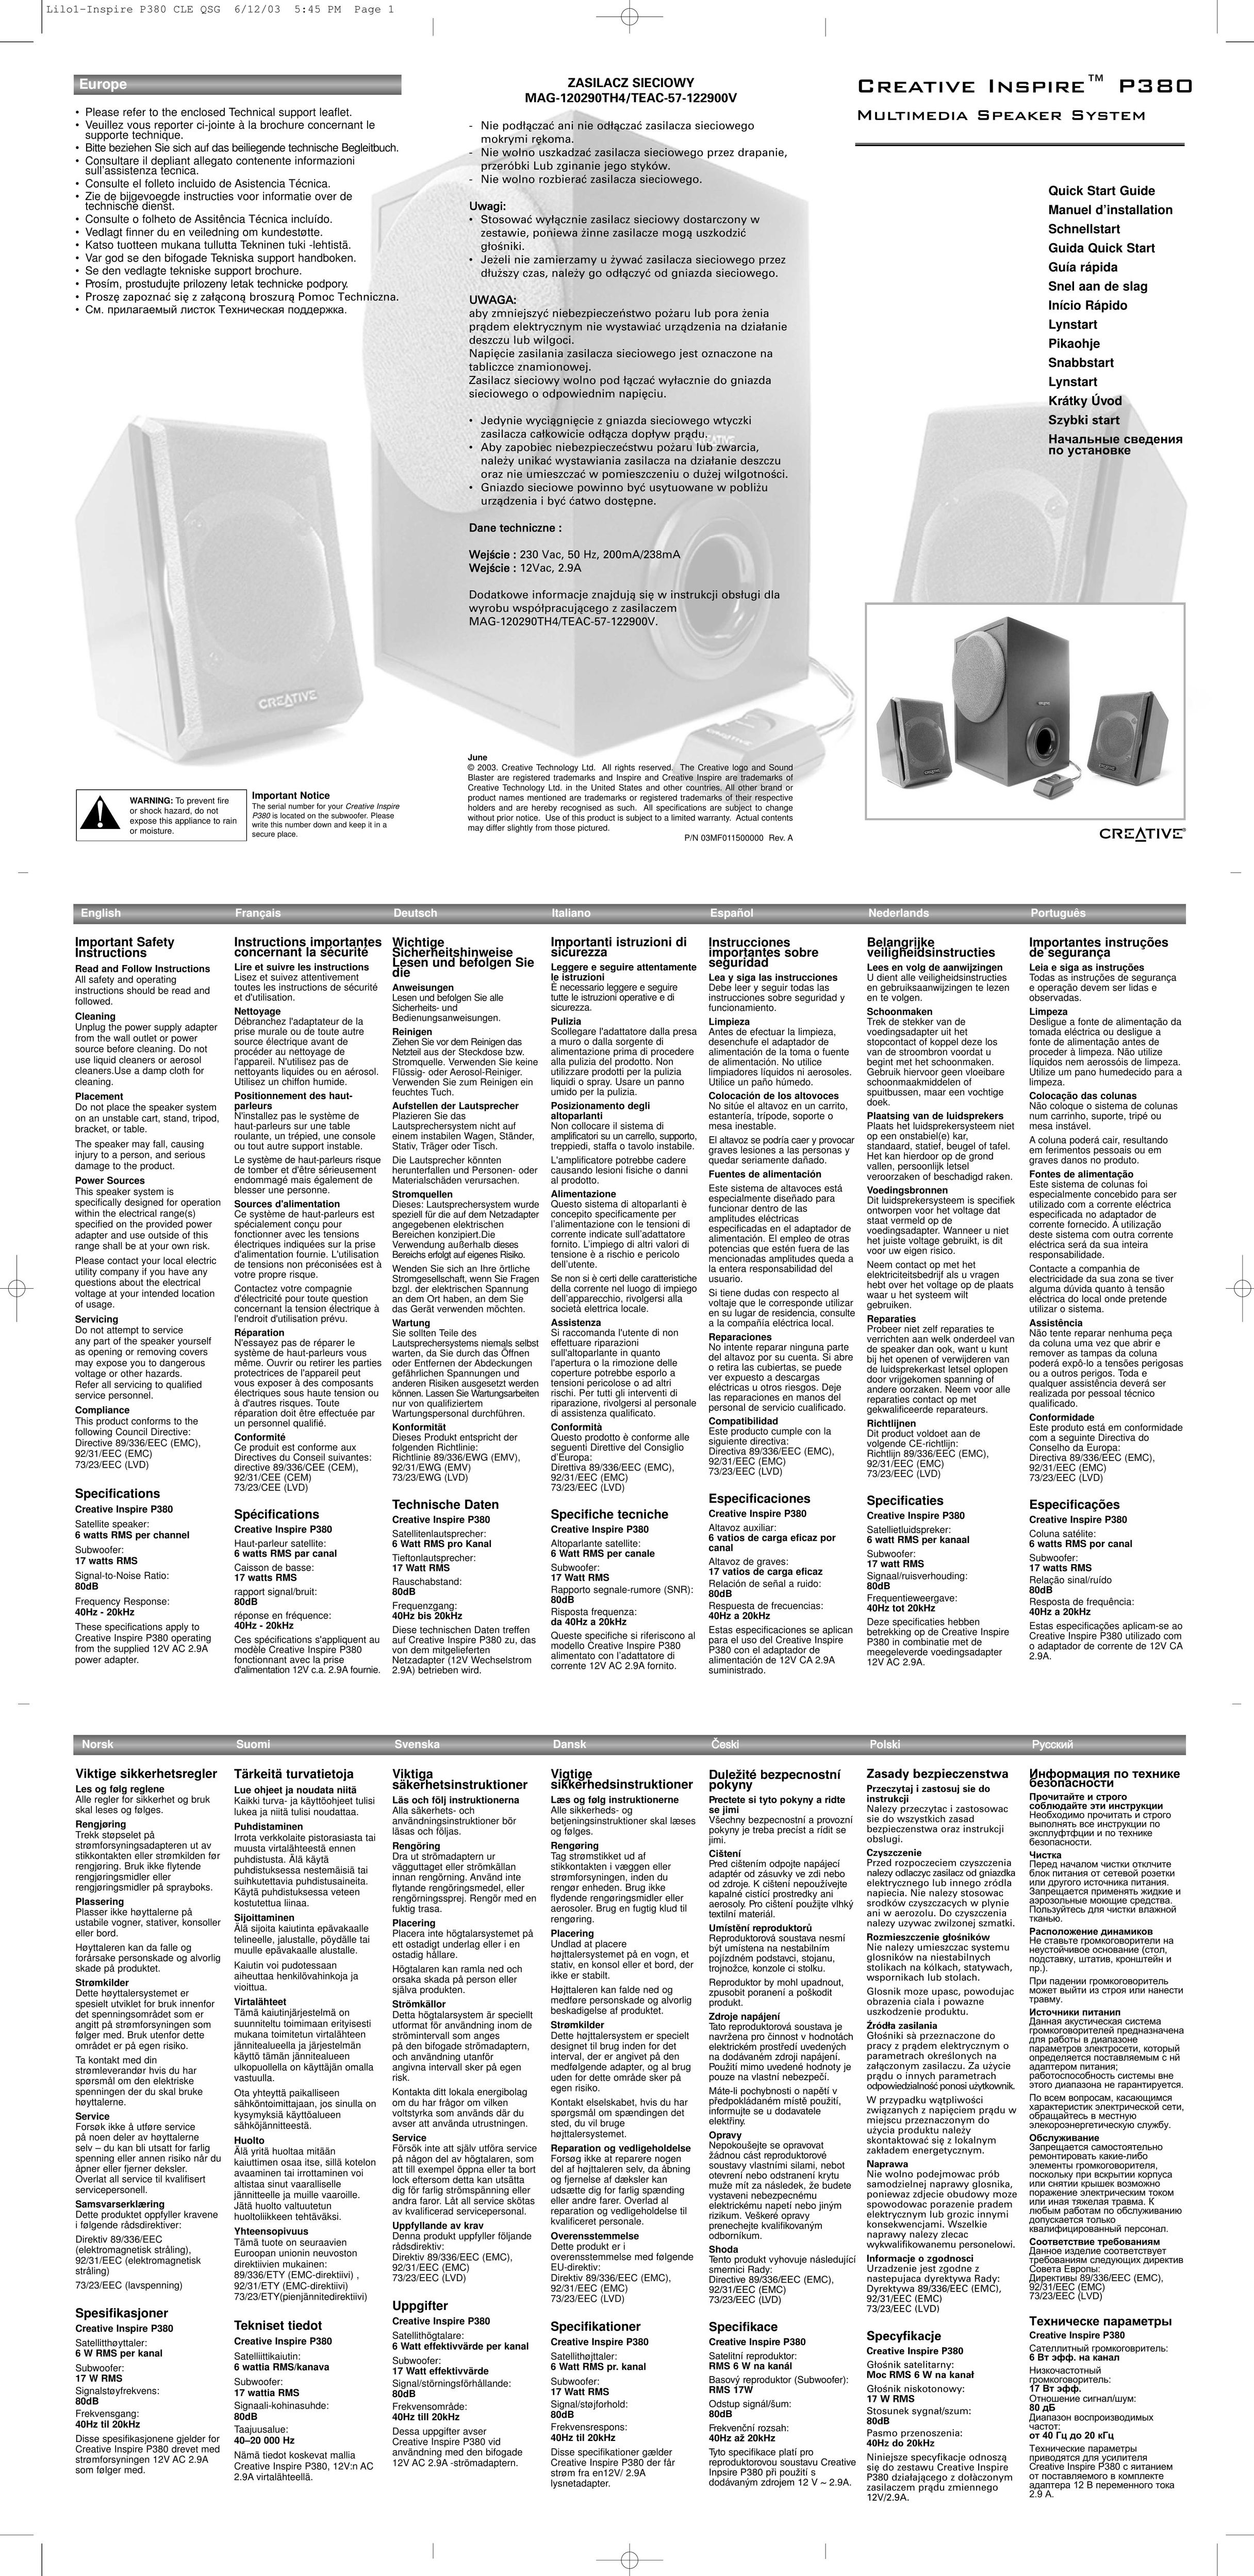 Creative Labs P380 Speaker System User Manual